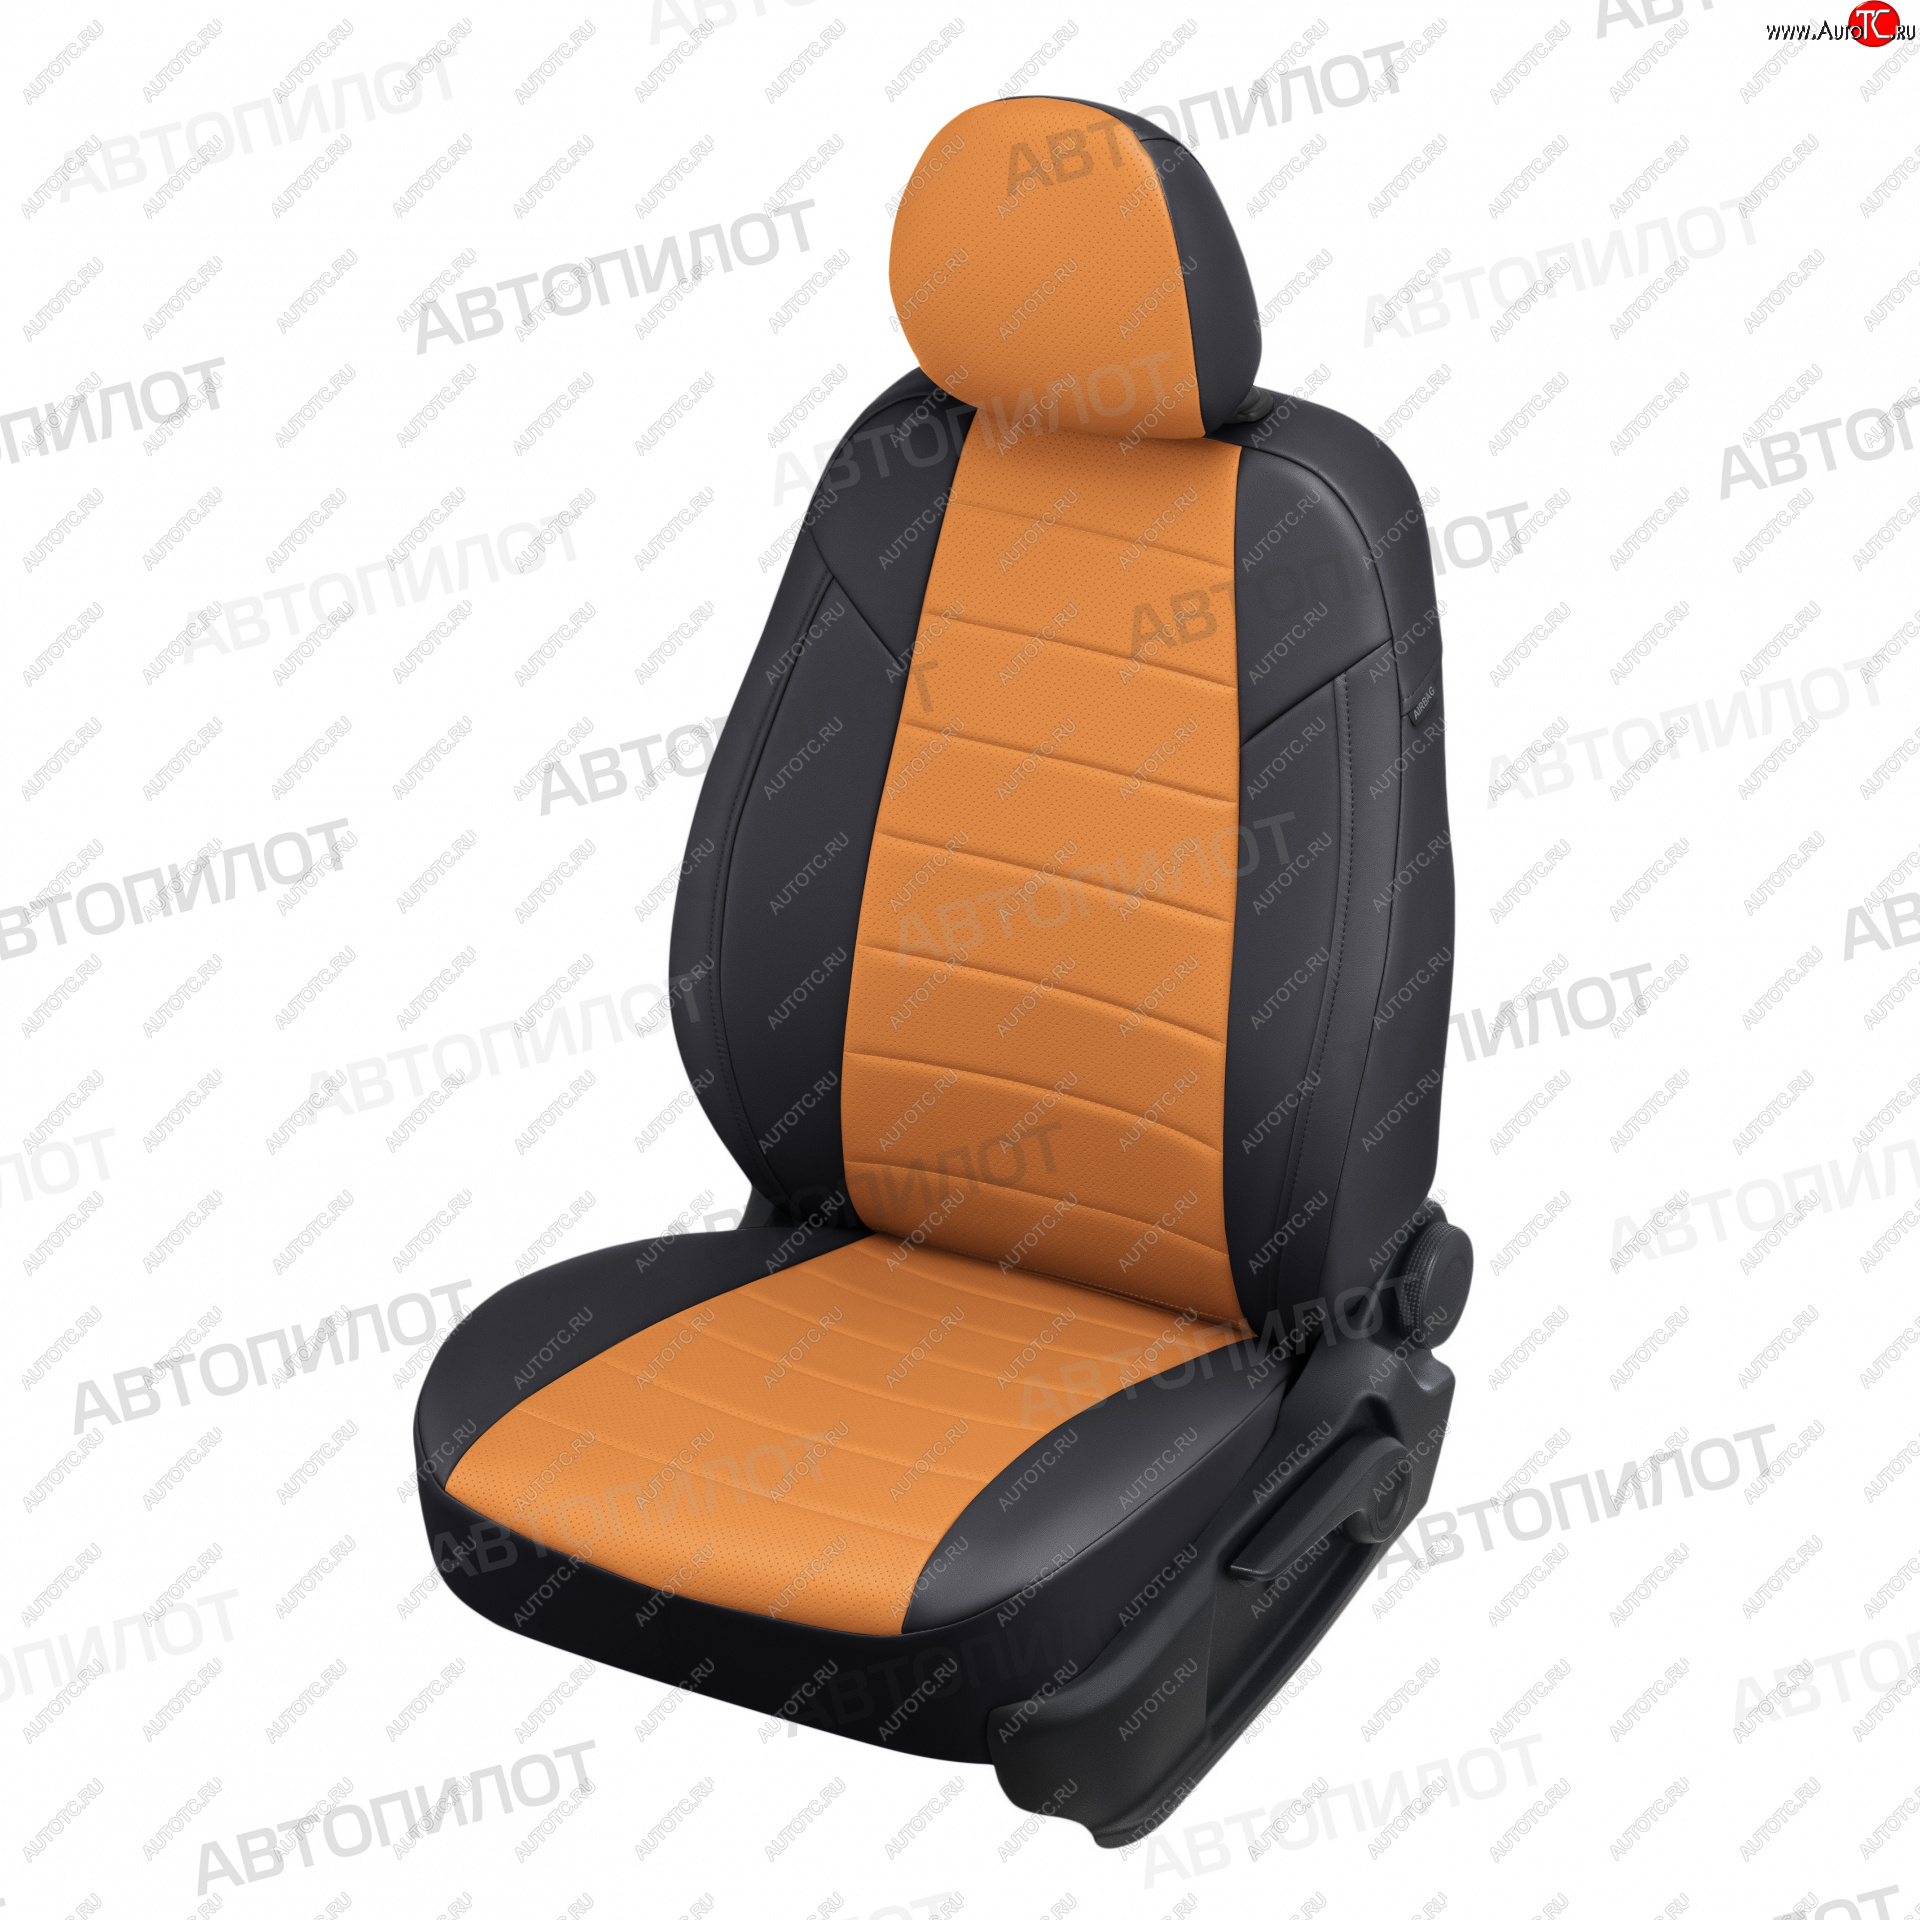 13 449 р. Чехлы сидений (экокожа) Автопилот  KIA Sportage  2 JE,KM (2008-2010) (черный/оранж)